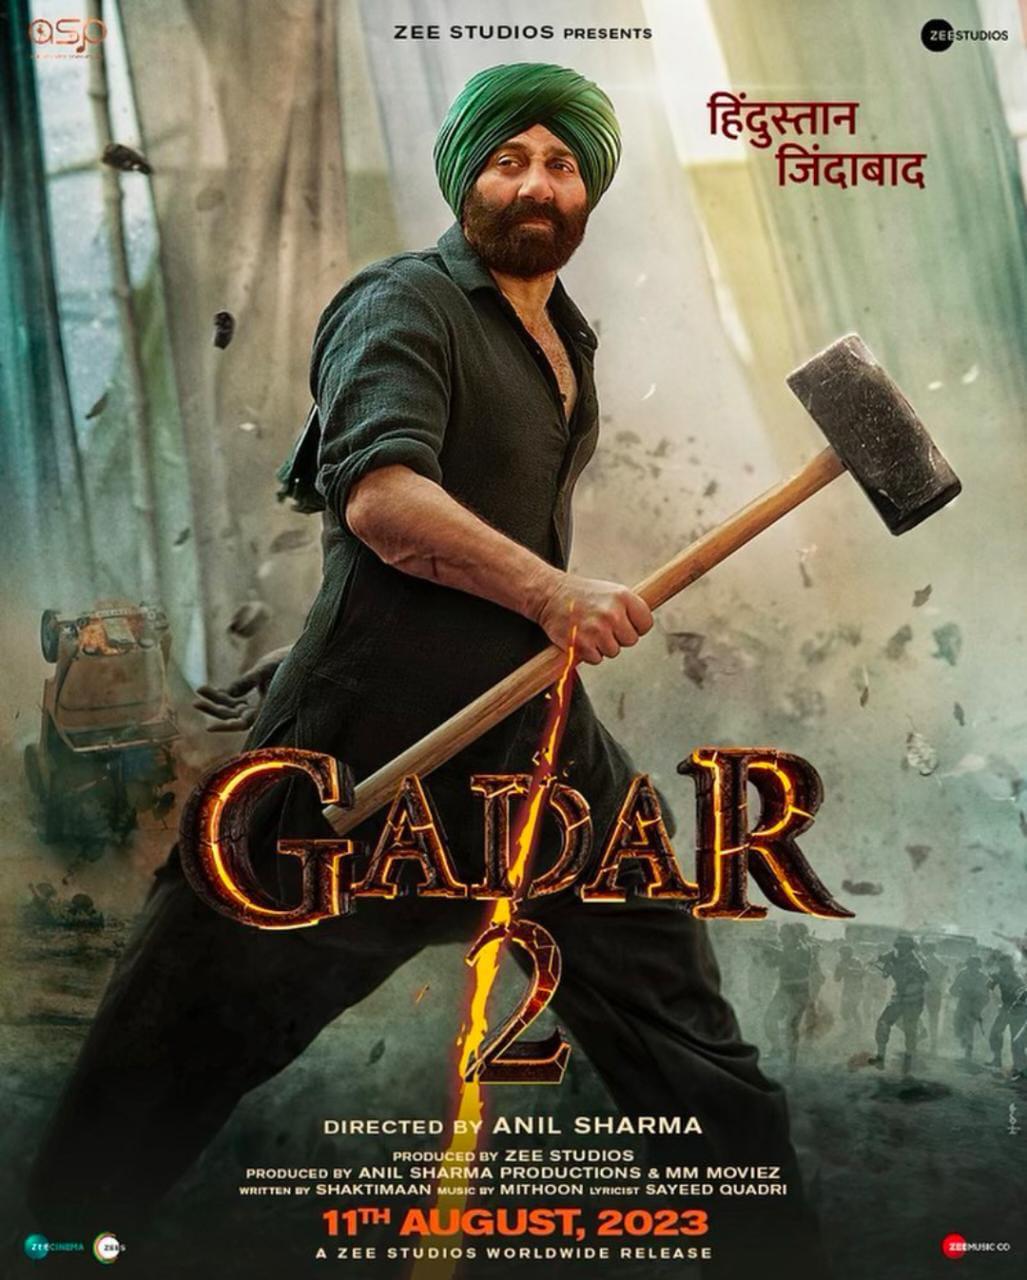 Sunny Deol wields a hammer in first poster of ‘Gadar 2’